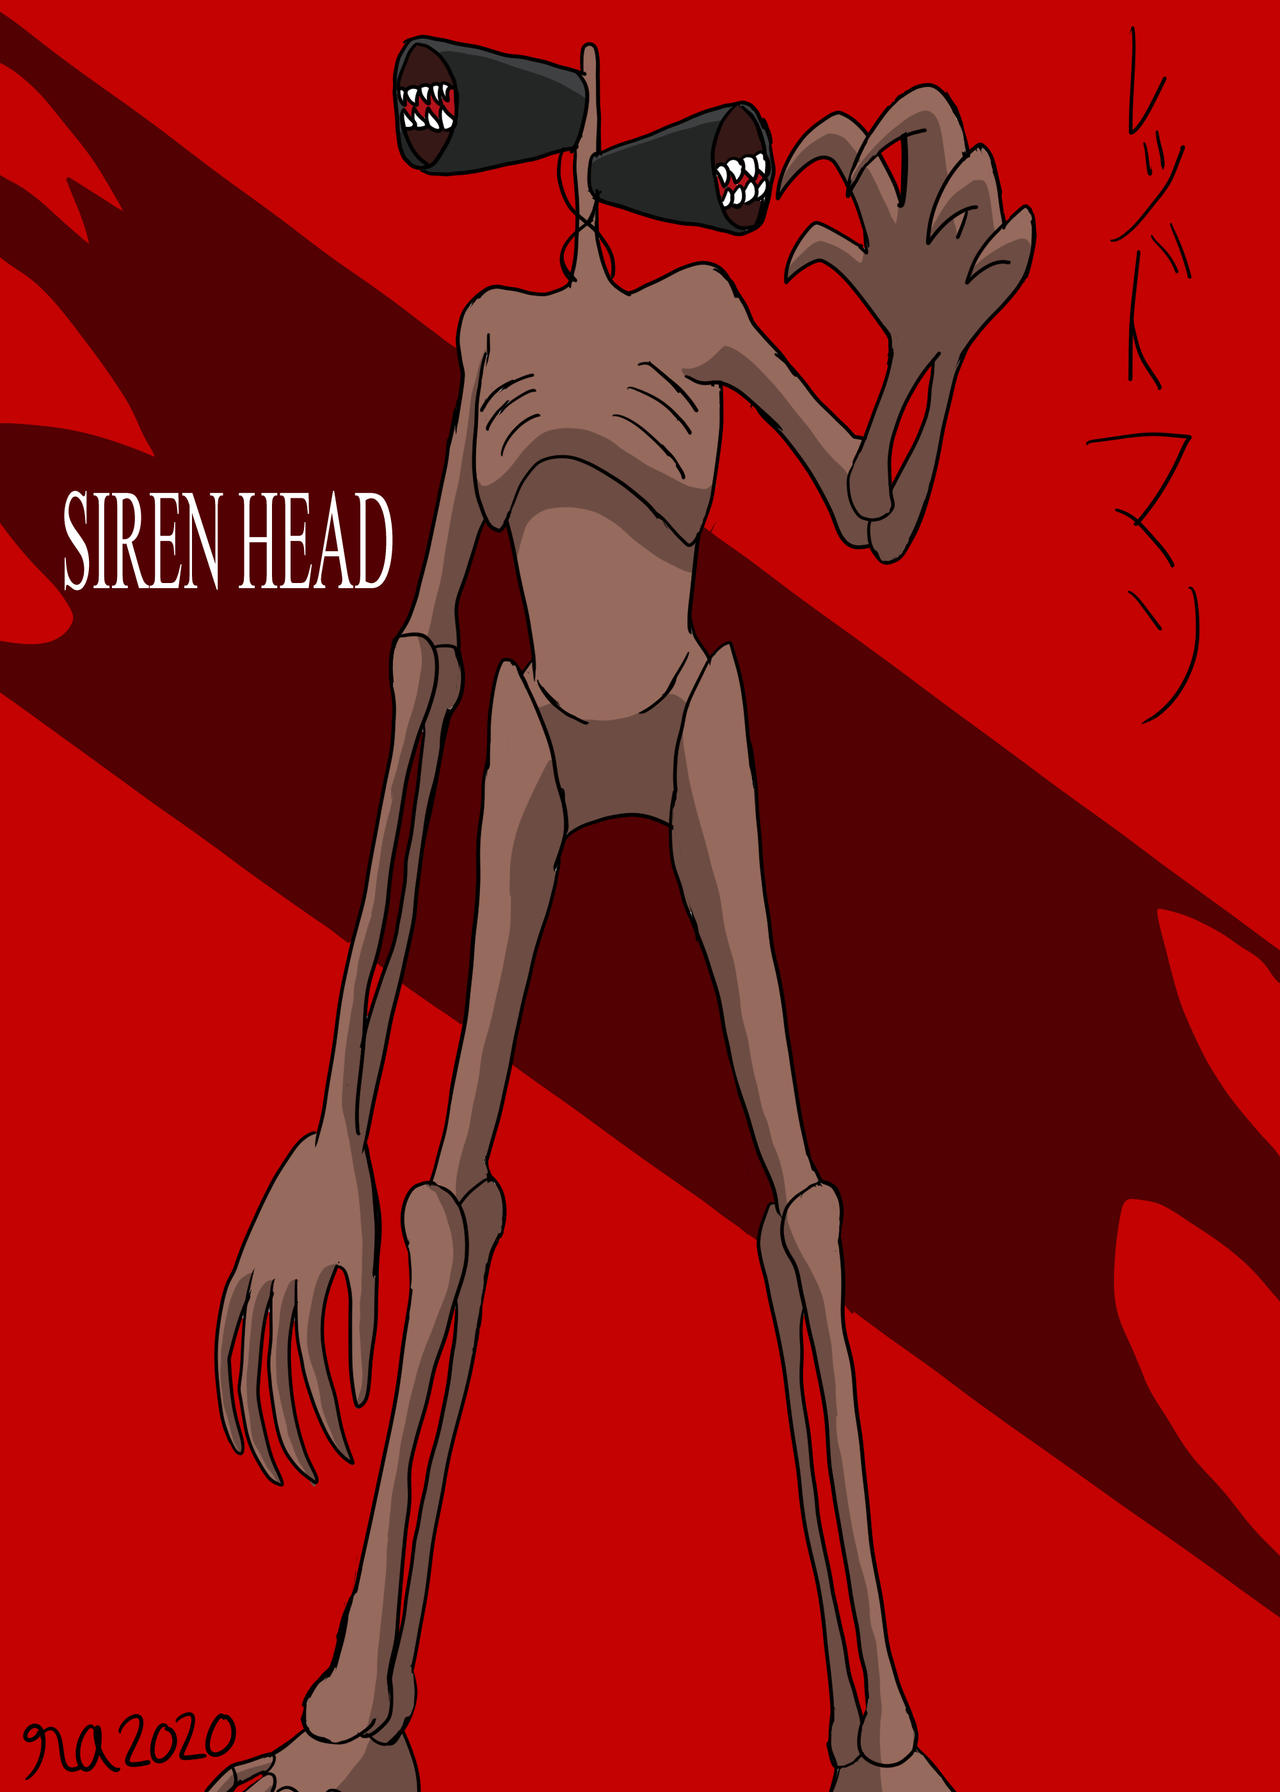 Siren Head by nashotobi on Newgrounds